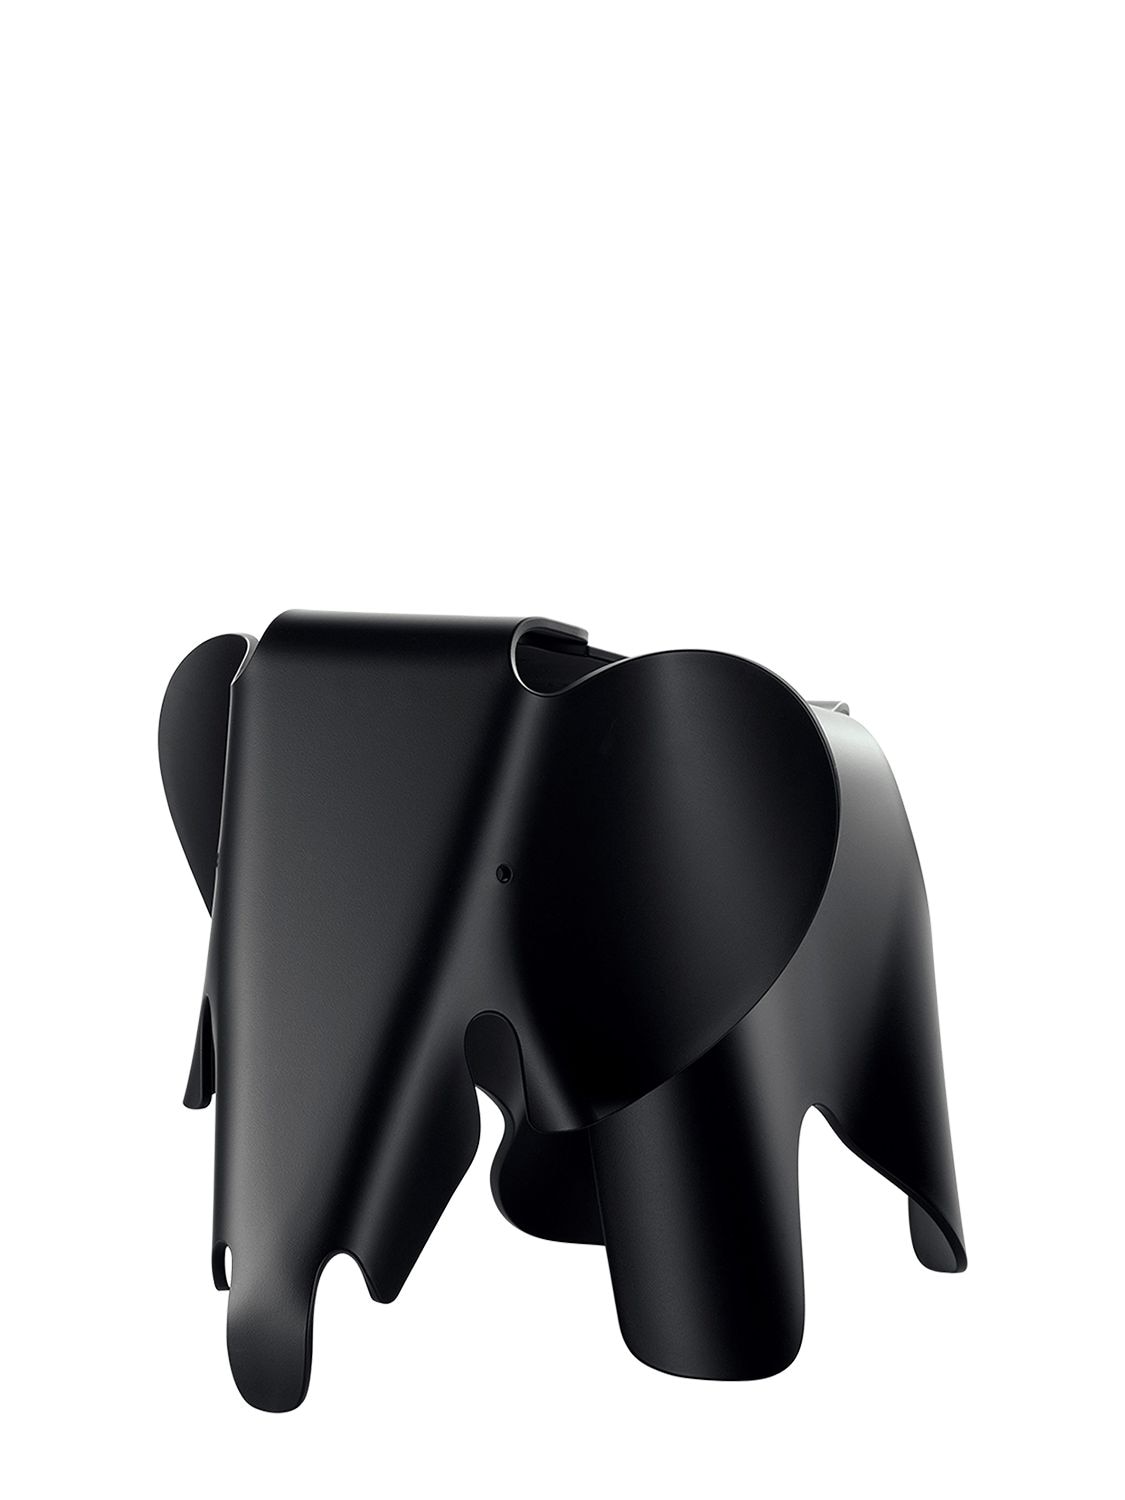 Vitra Small Eames Elephant In Black